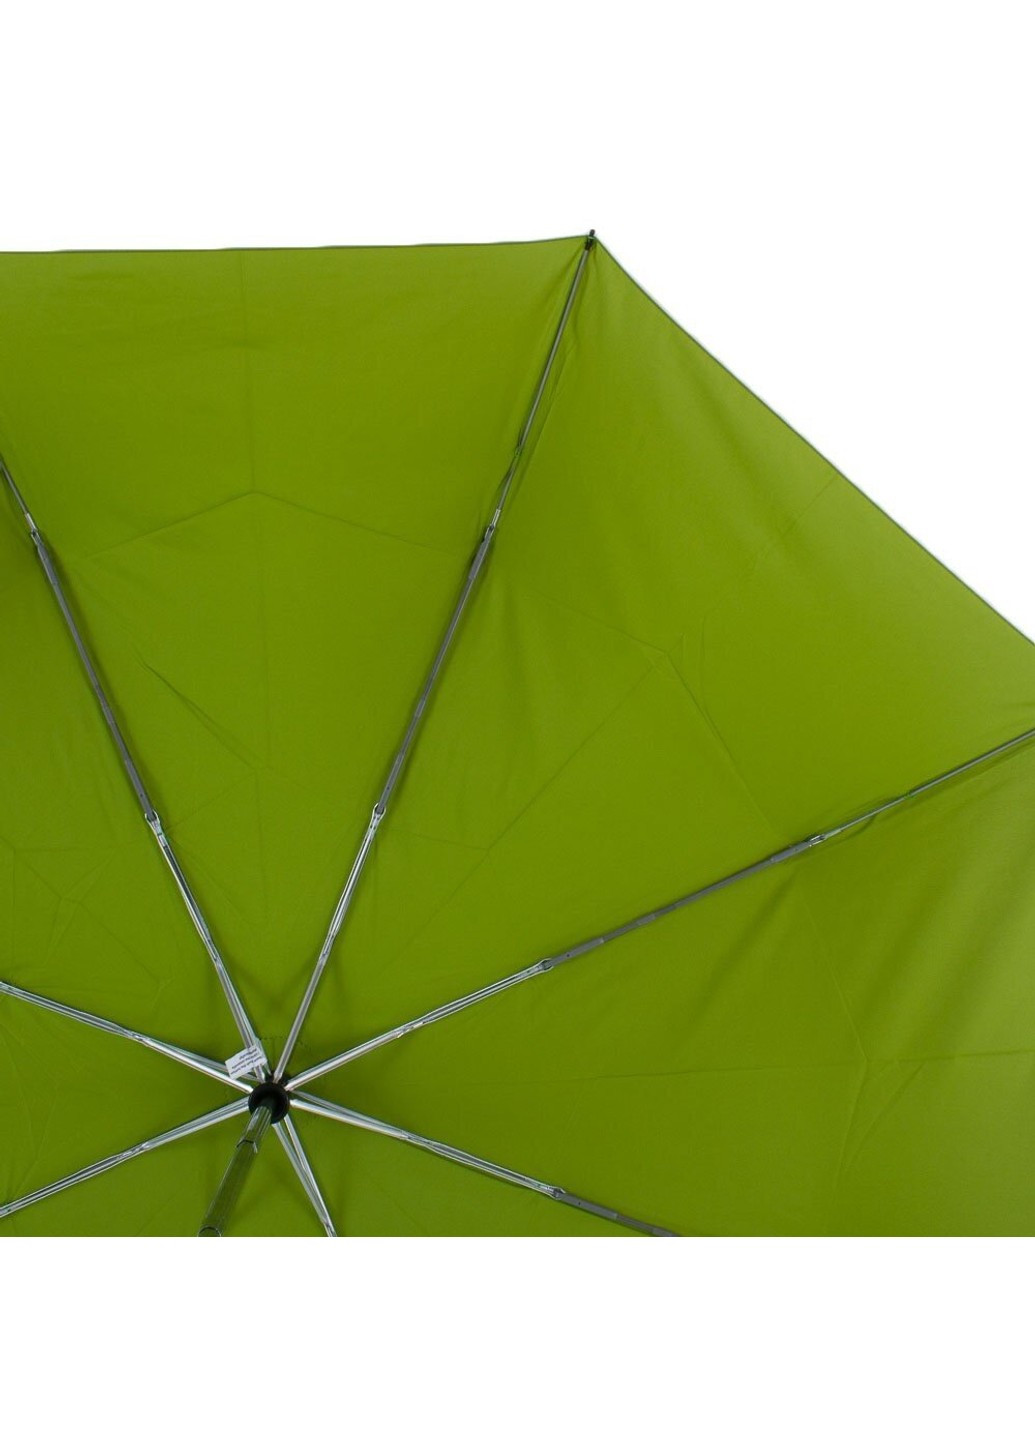 Мужской автоматический зонт 5601-lime FARE (262976071)